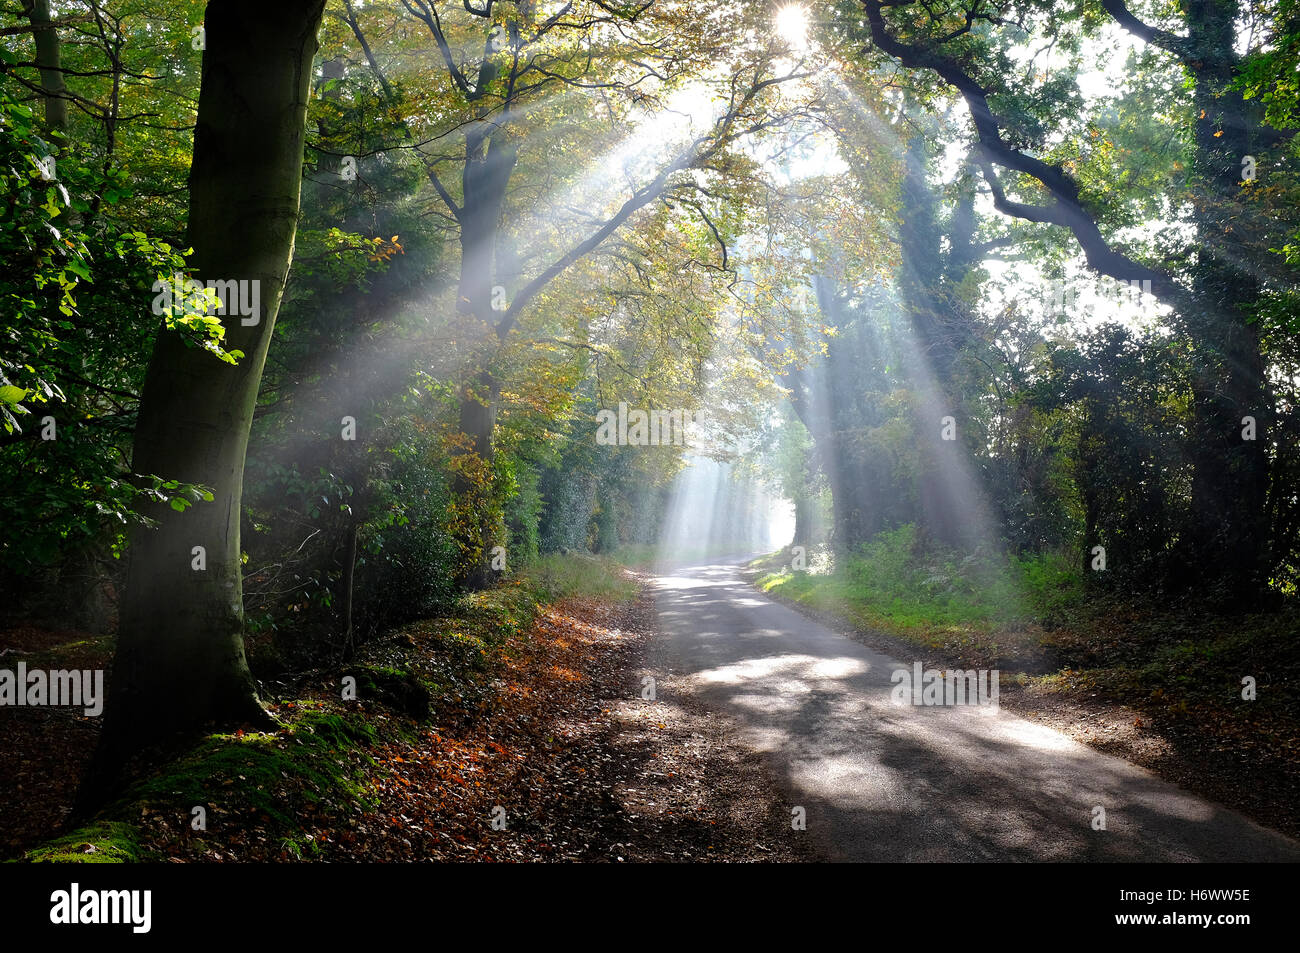 sunlight streaming through autumn woodland trees, norfolk, england Stock Photo